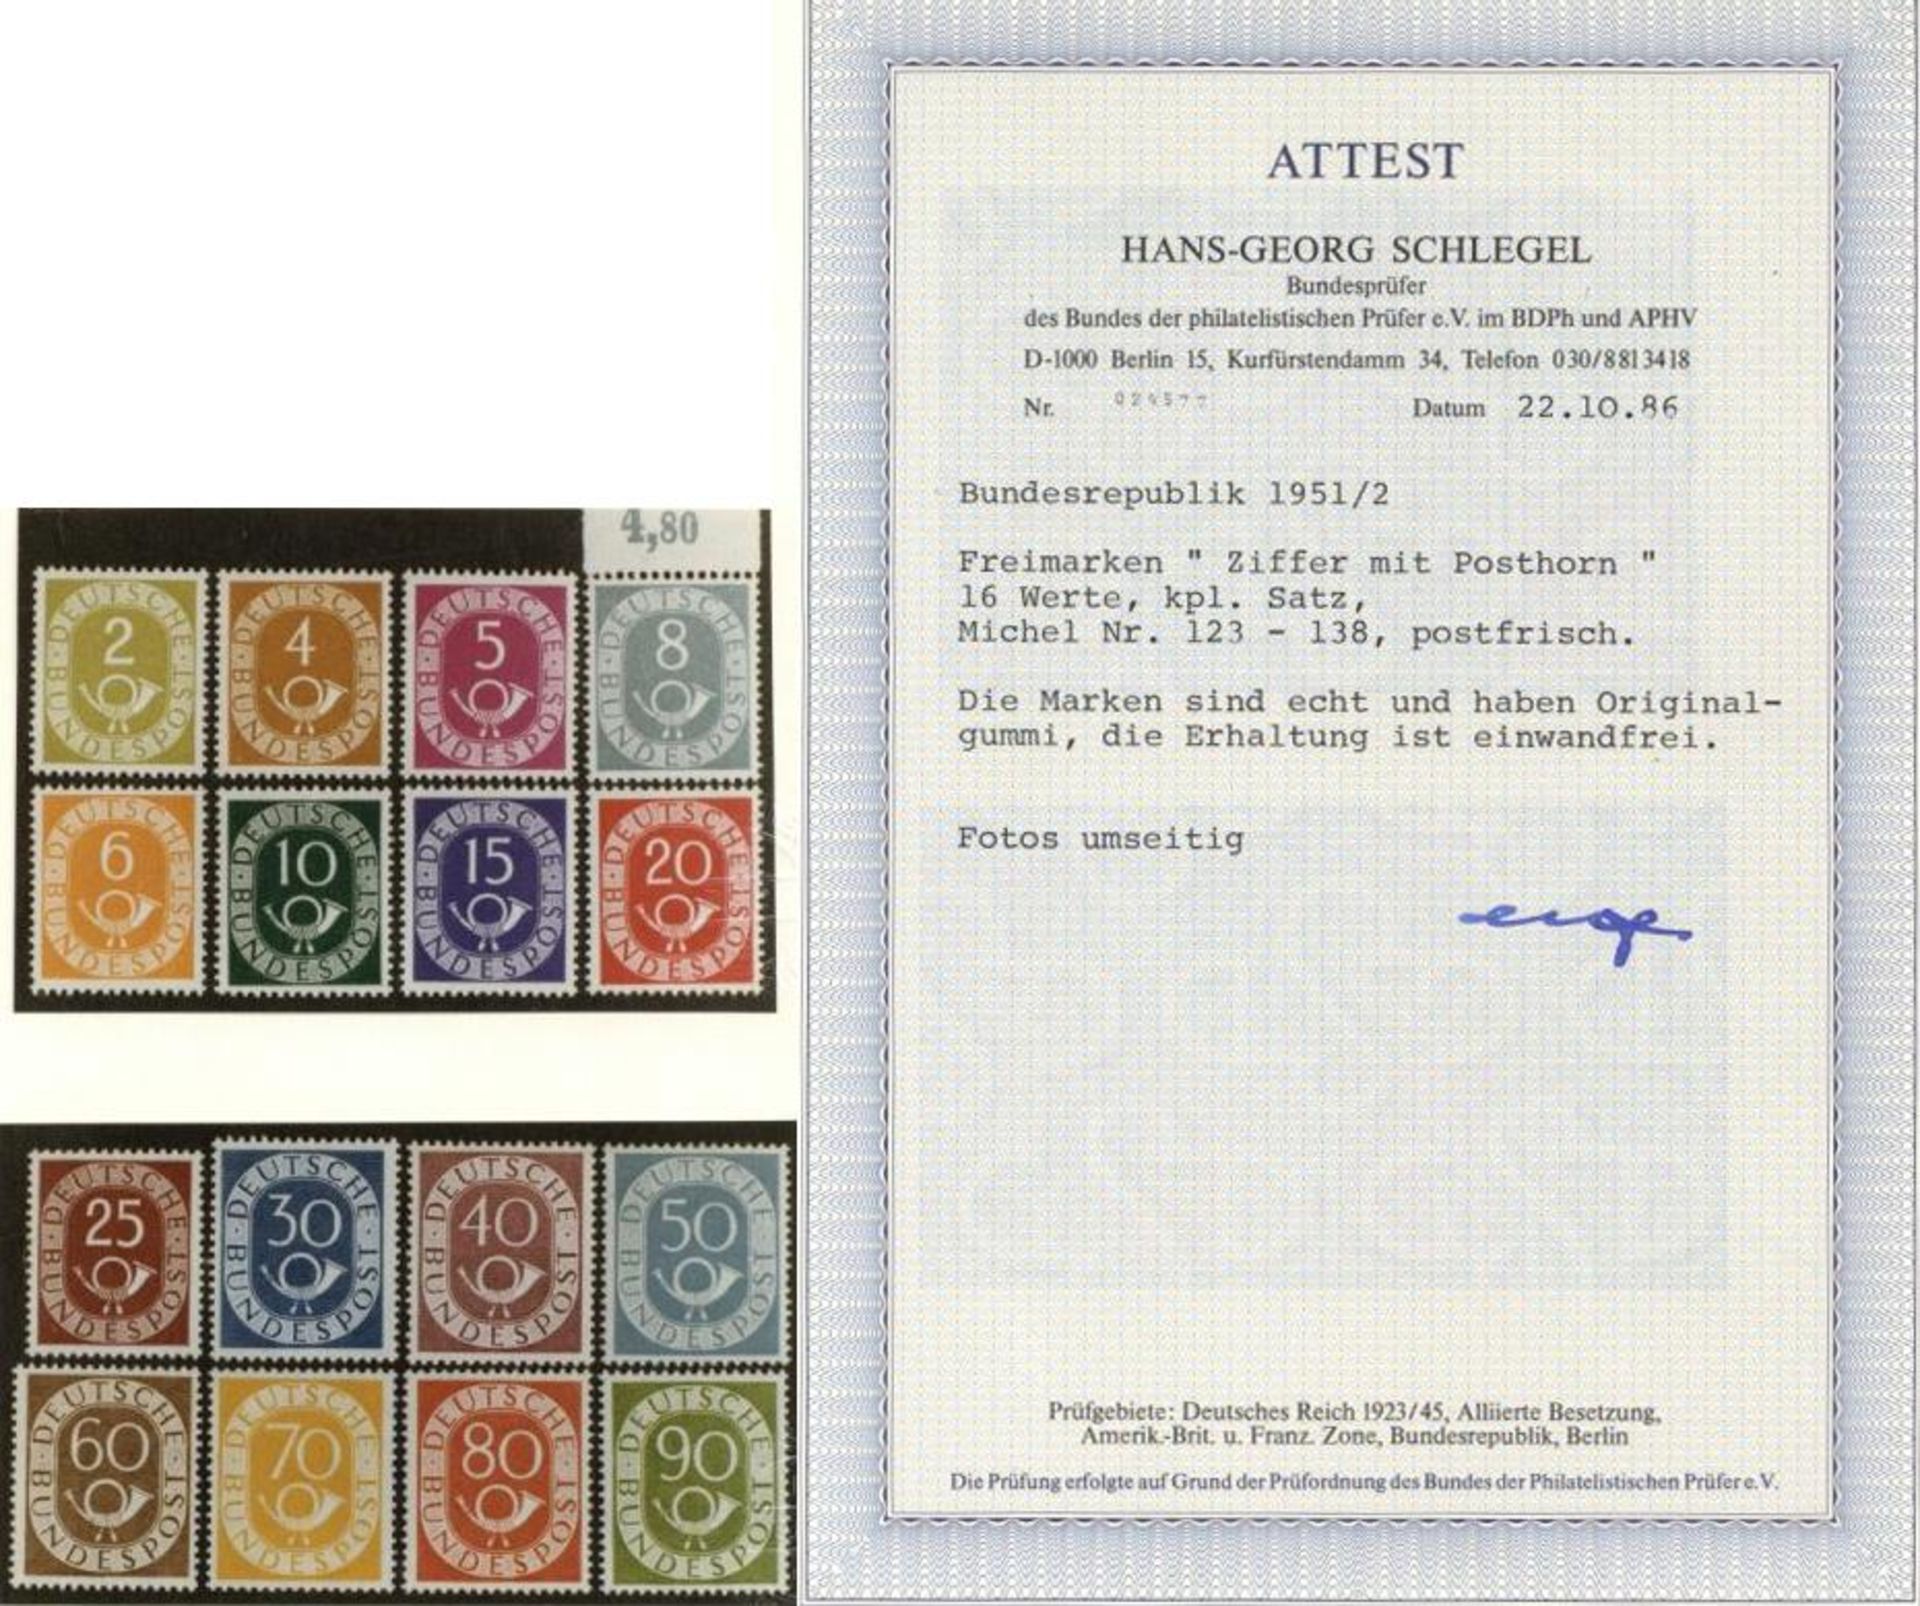 BUNDESREPUBLIK 1949/93, Sammlung im 3 KA-BE Vordruckbindern -bi-collect-, nahezu komplett, ** und